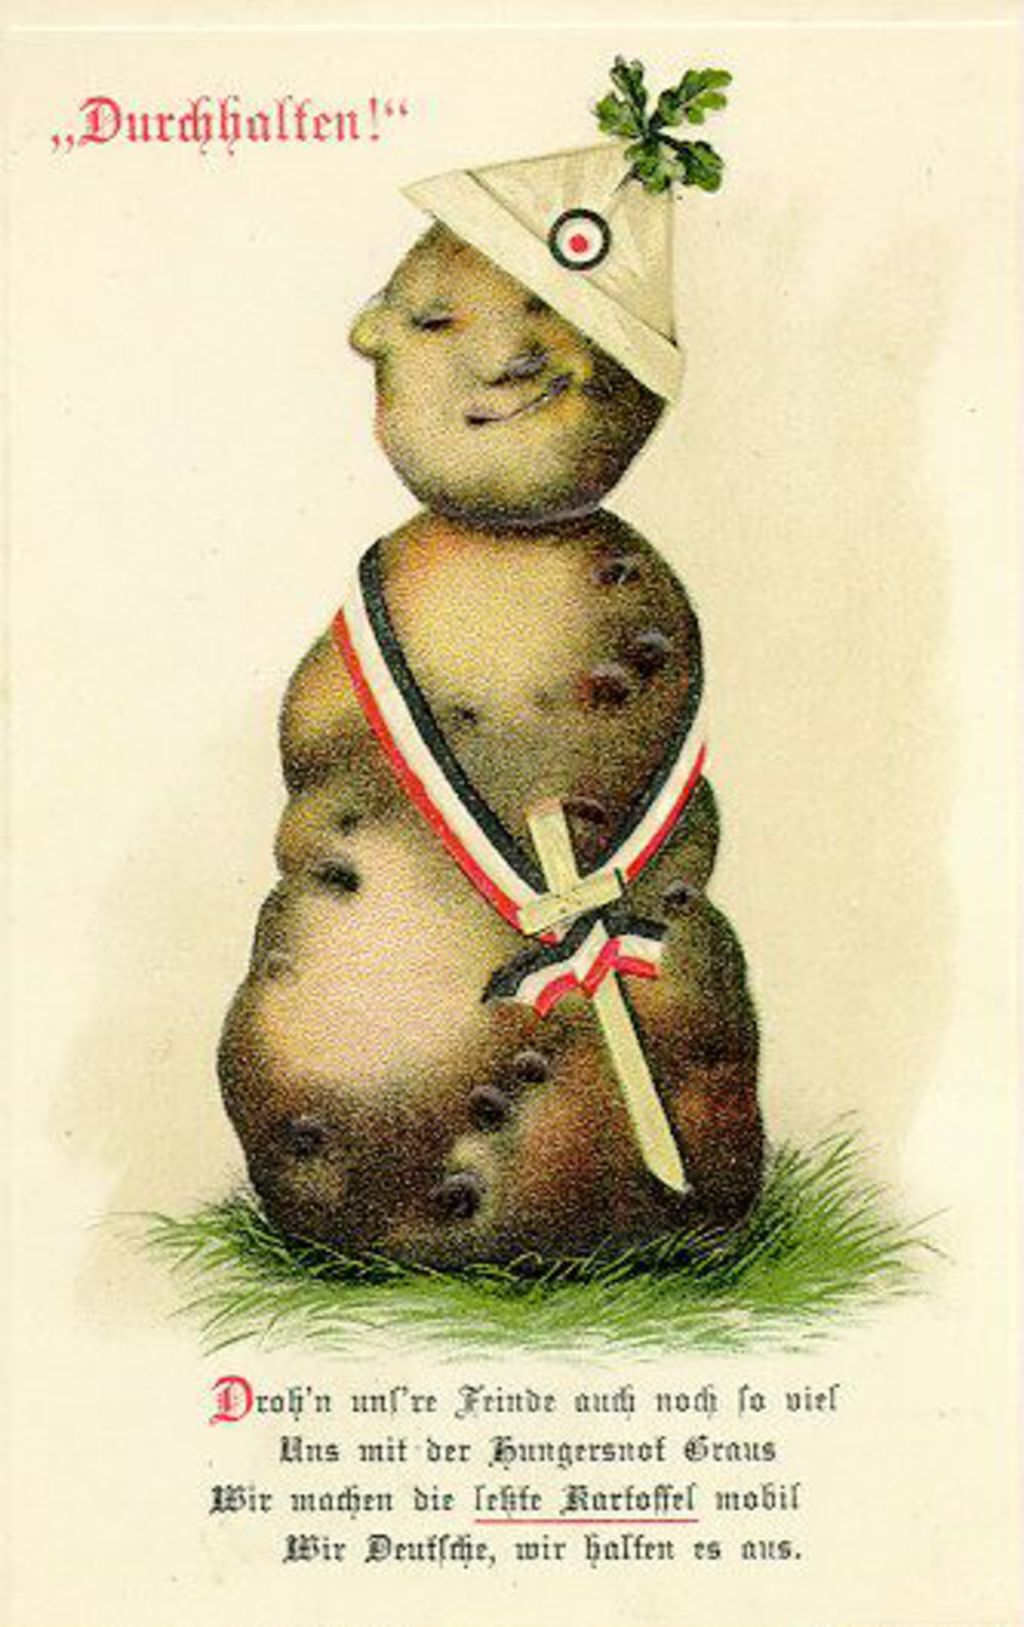 „Durchhaltenl“（耐えぬけ！）と書かれた第一次世界大戦中のドイツのプロパガンダ用のポスター。ジャガイモが兵士のように描かれている。